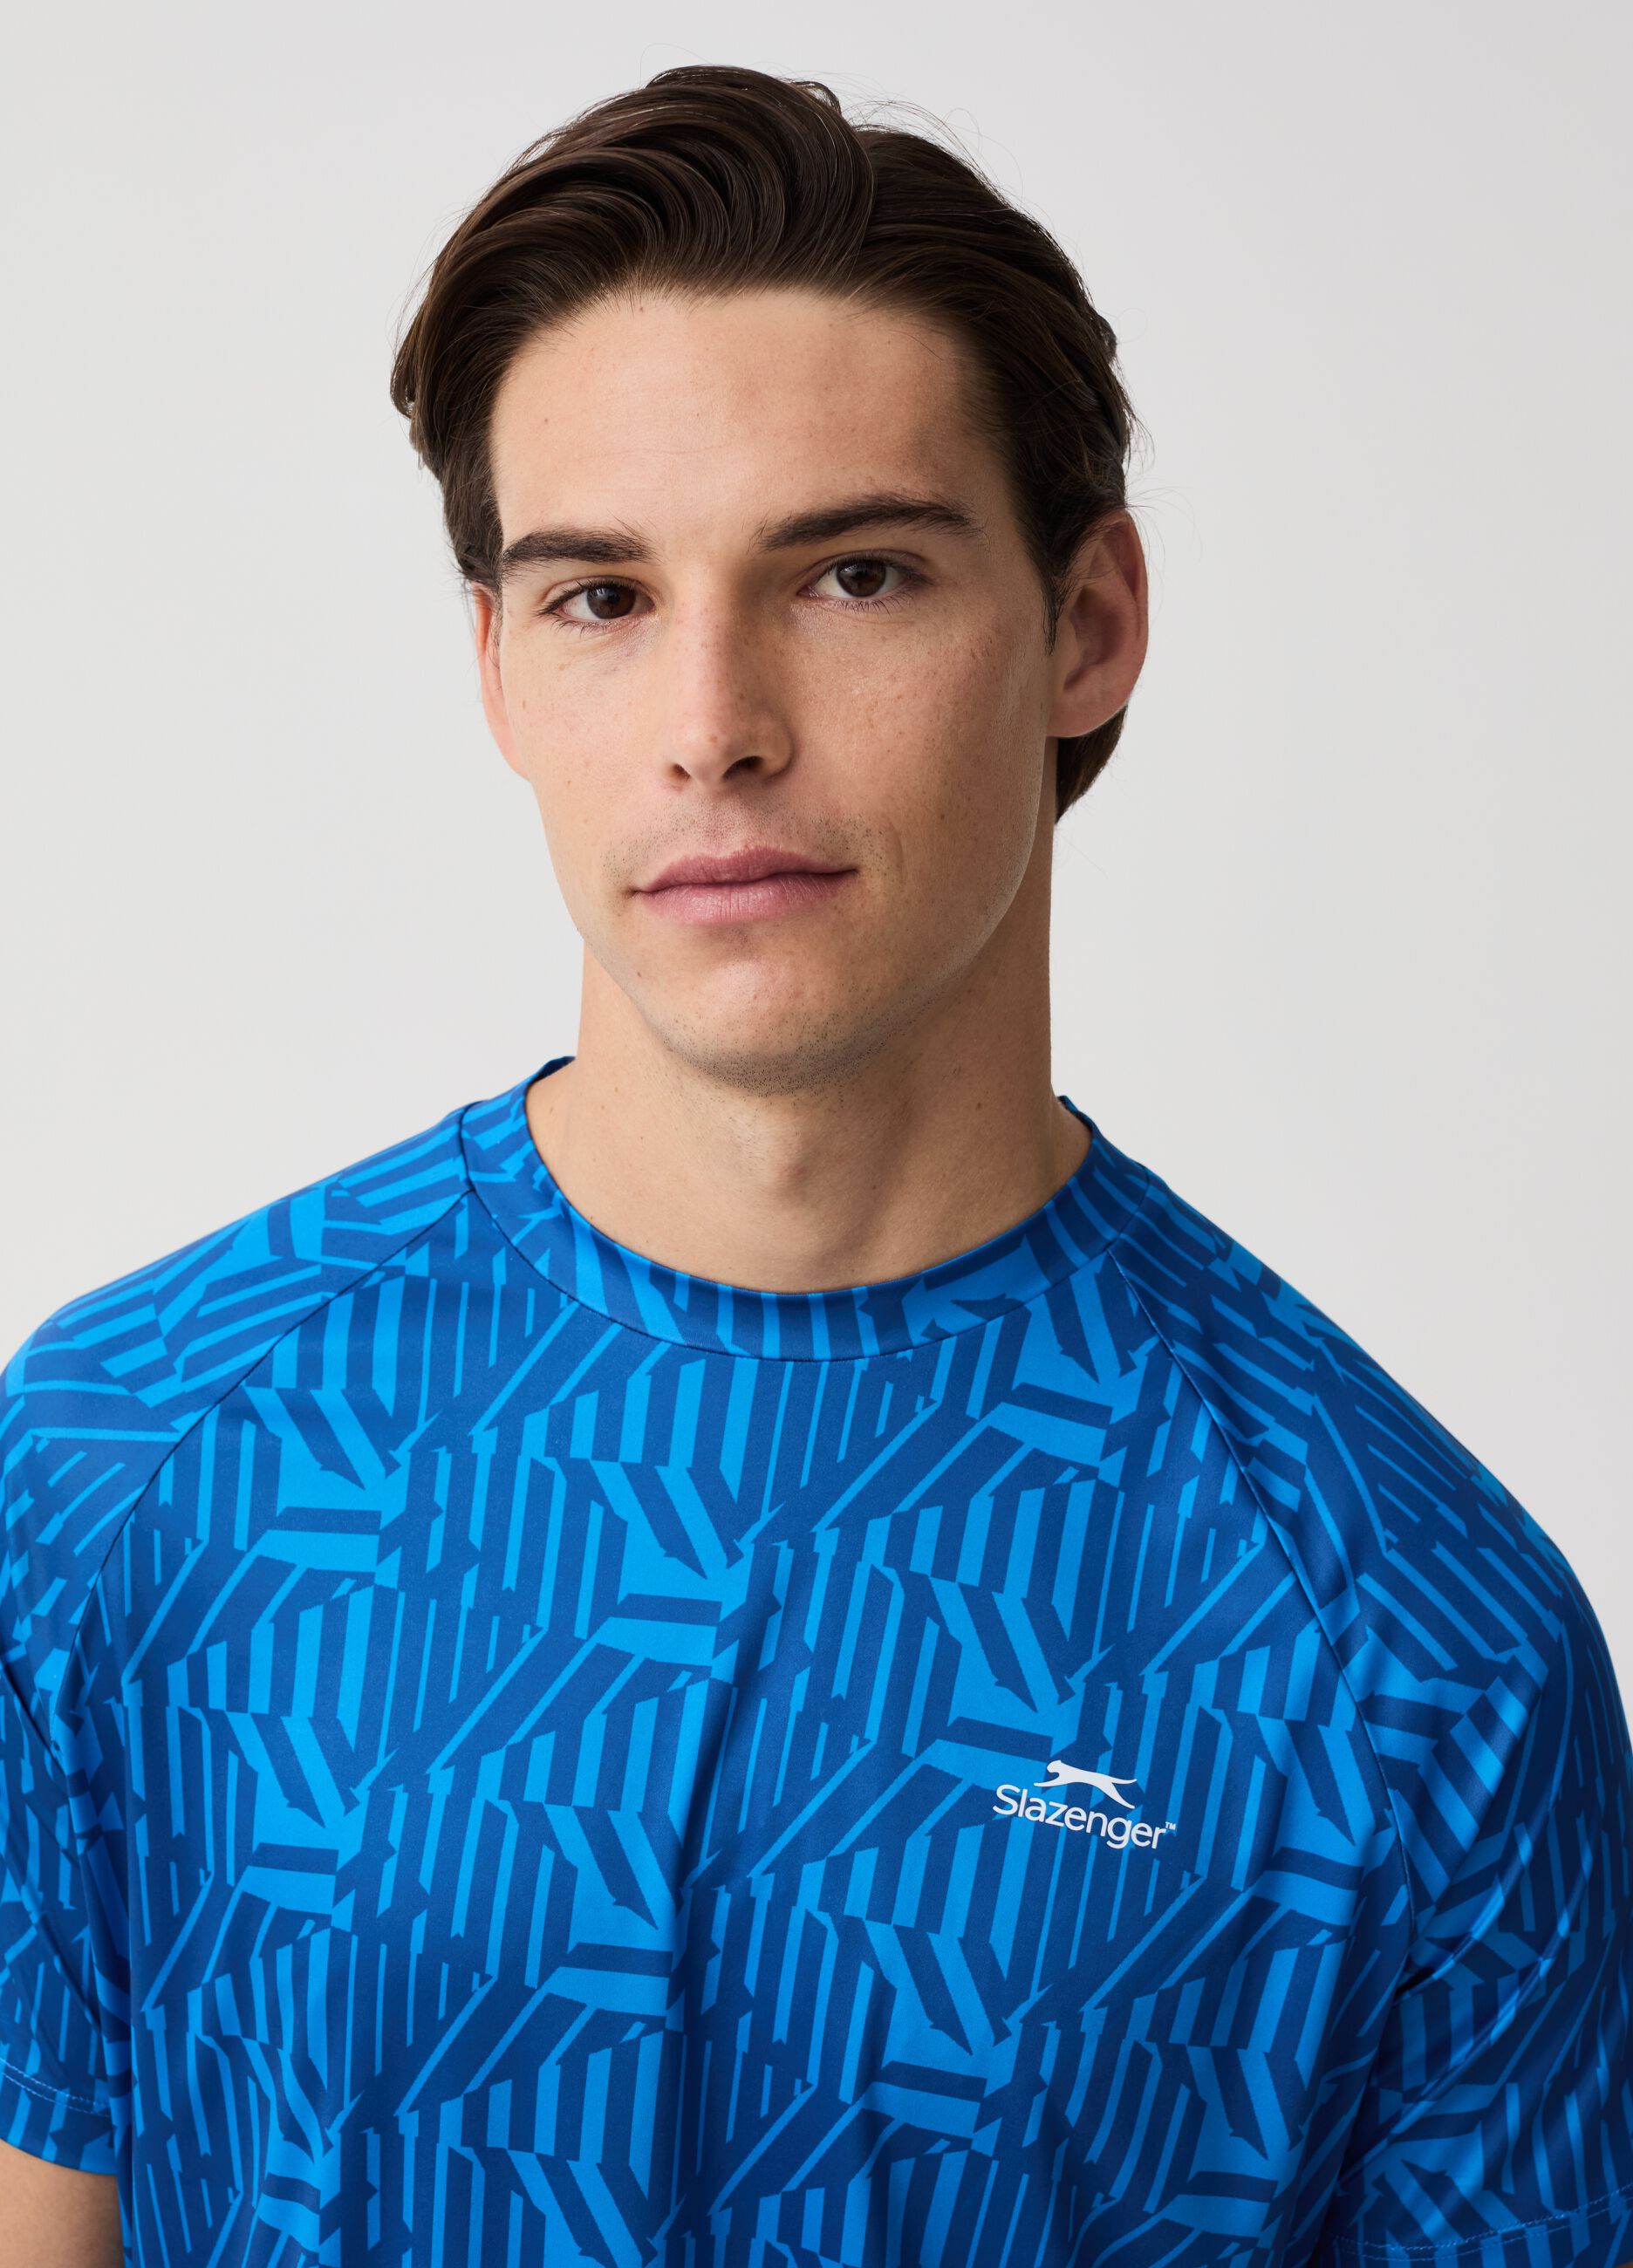 Slazenger tennis T-shirt with pattern